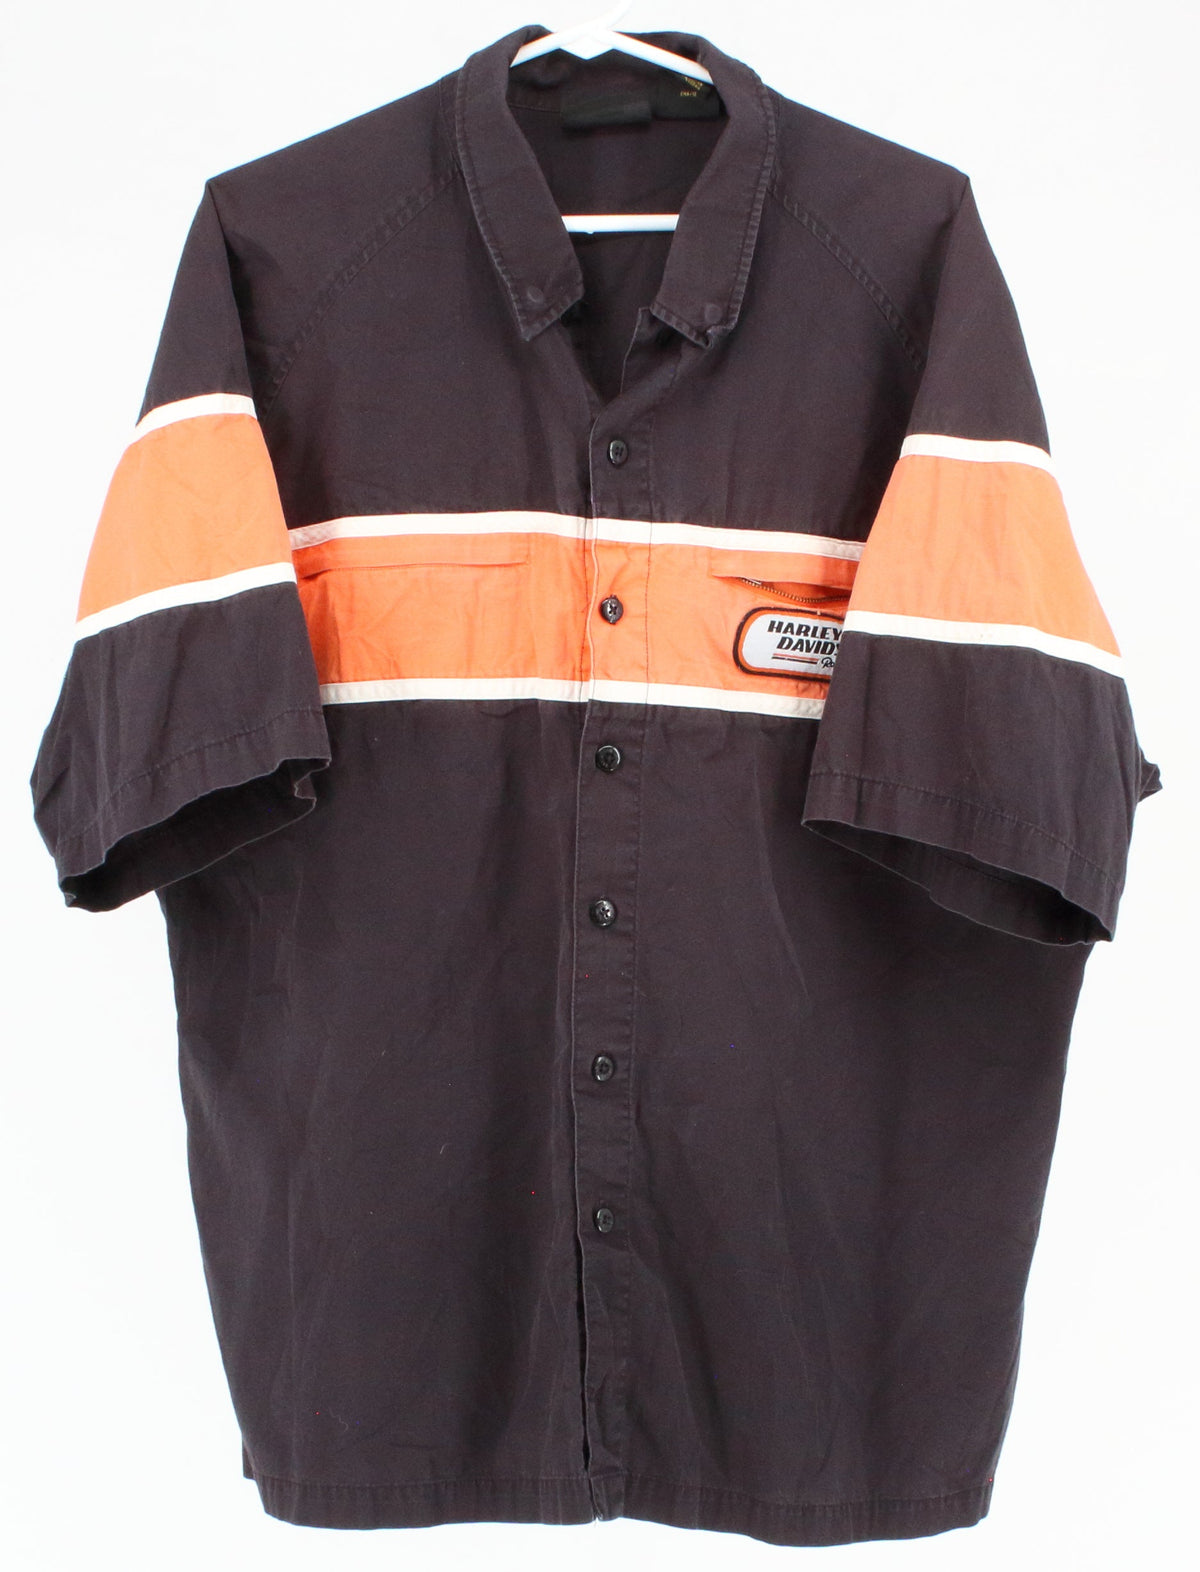 Harley Davidson Racing Black & Orange Back Patch Embroided Short Sleeve Shirt